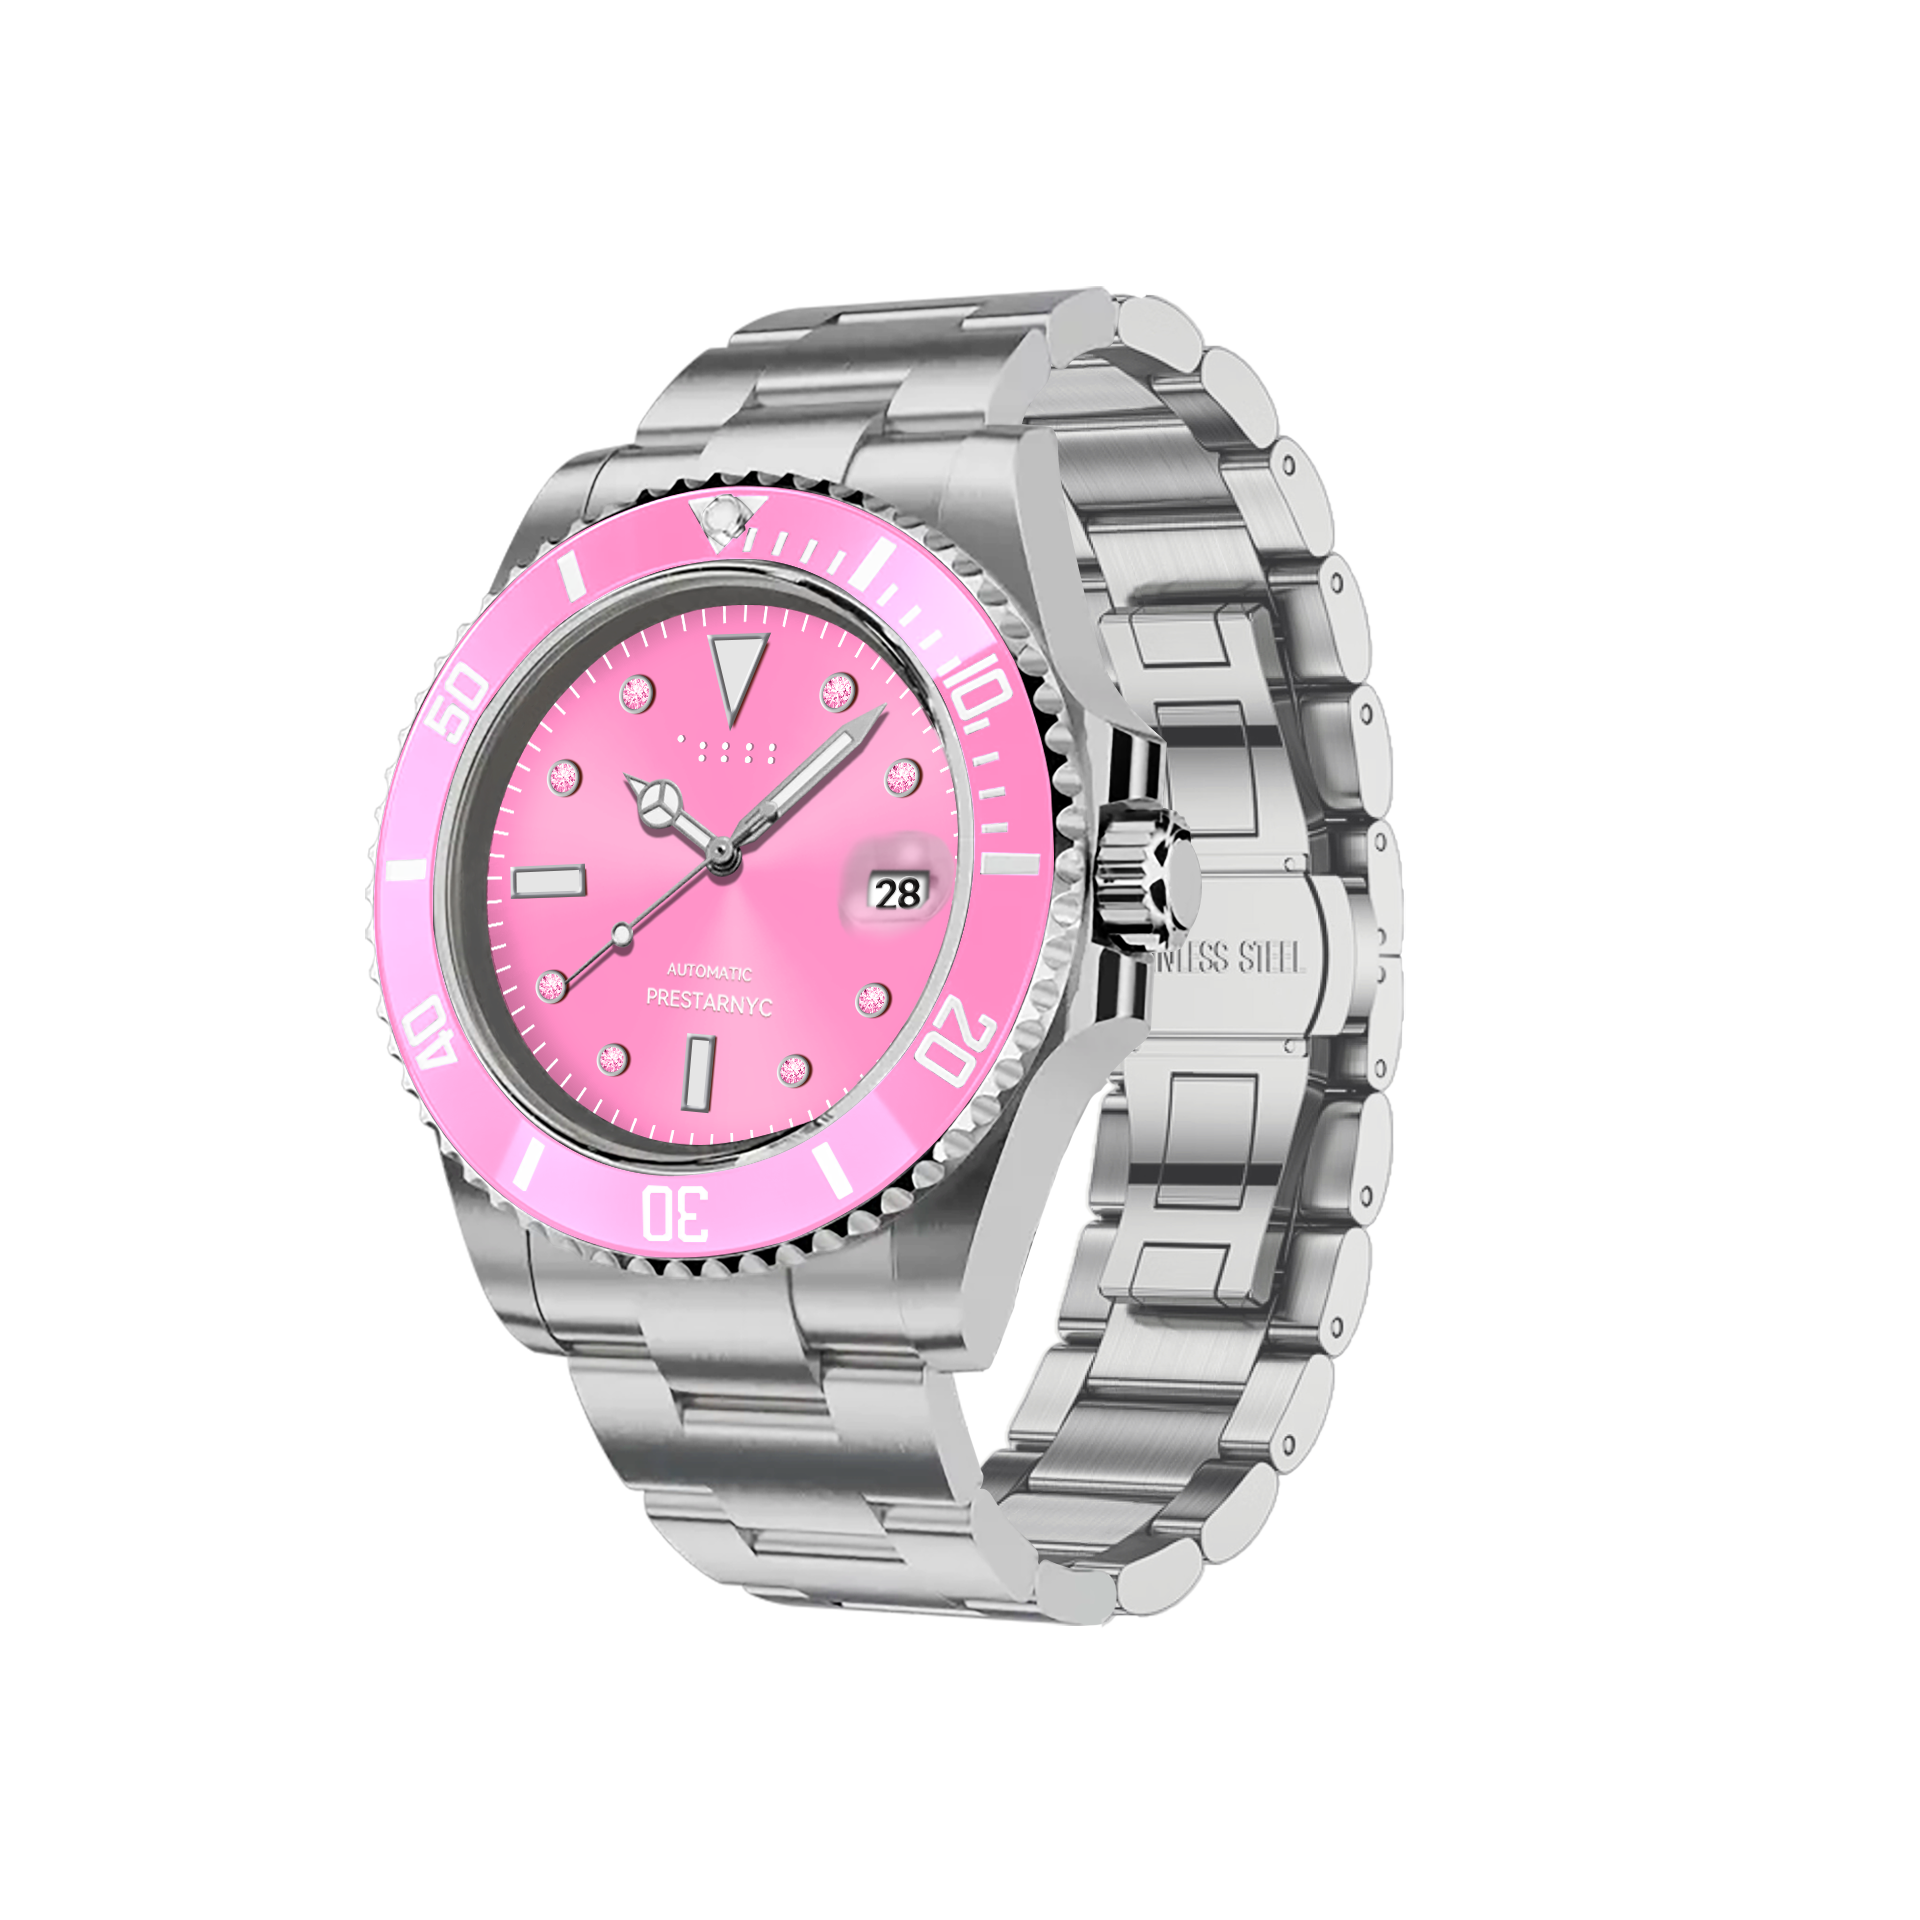 Prestar NYC Aquaman Classic Color Gemstone Watch (Cherry Blossom)